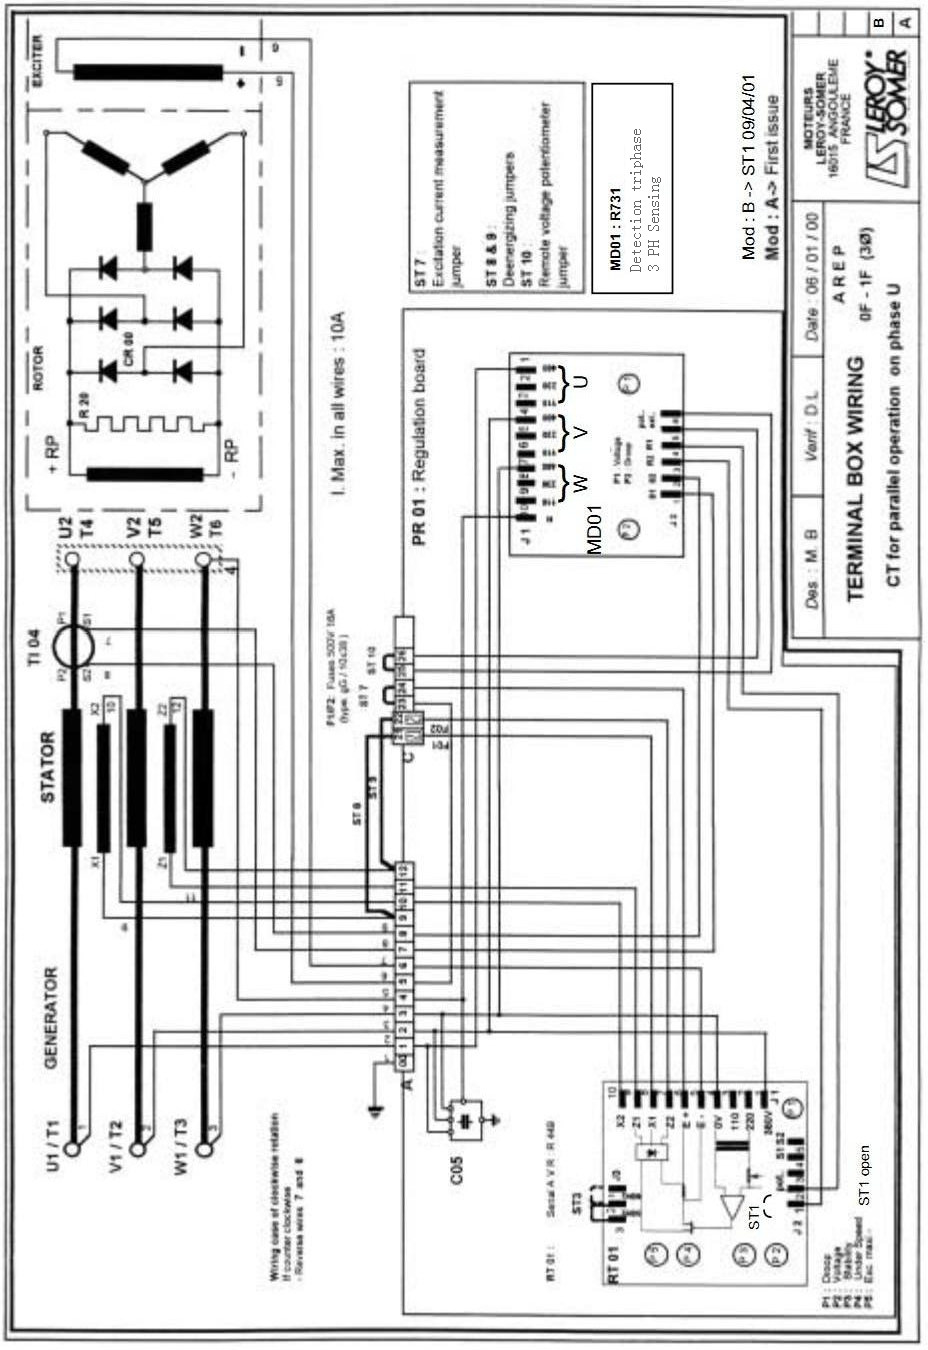 Sx460 Avr Wiring Diagram